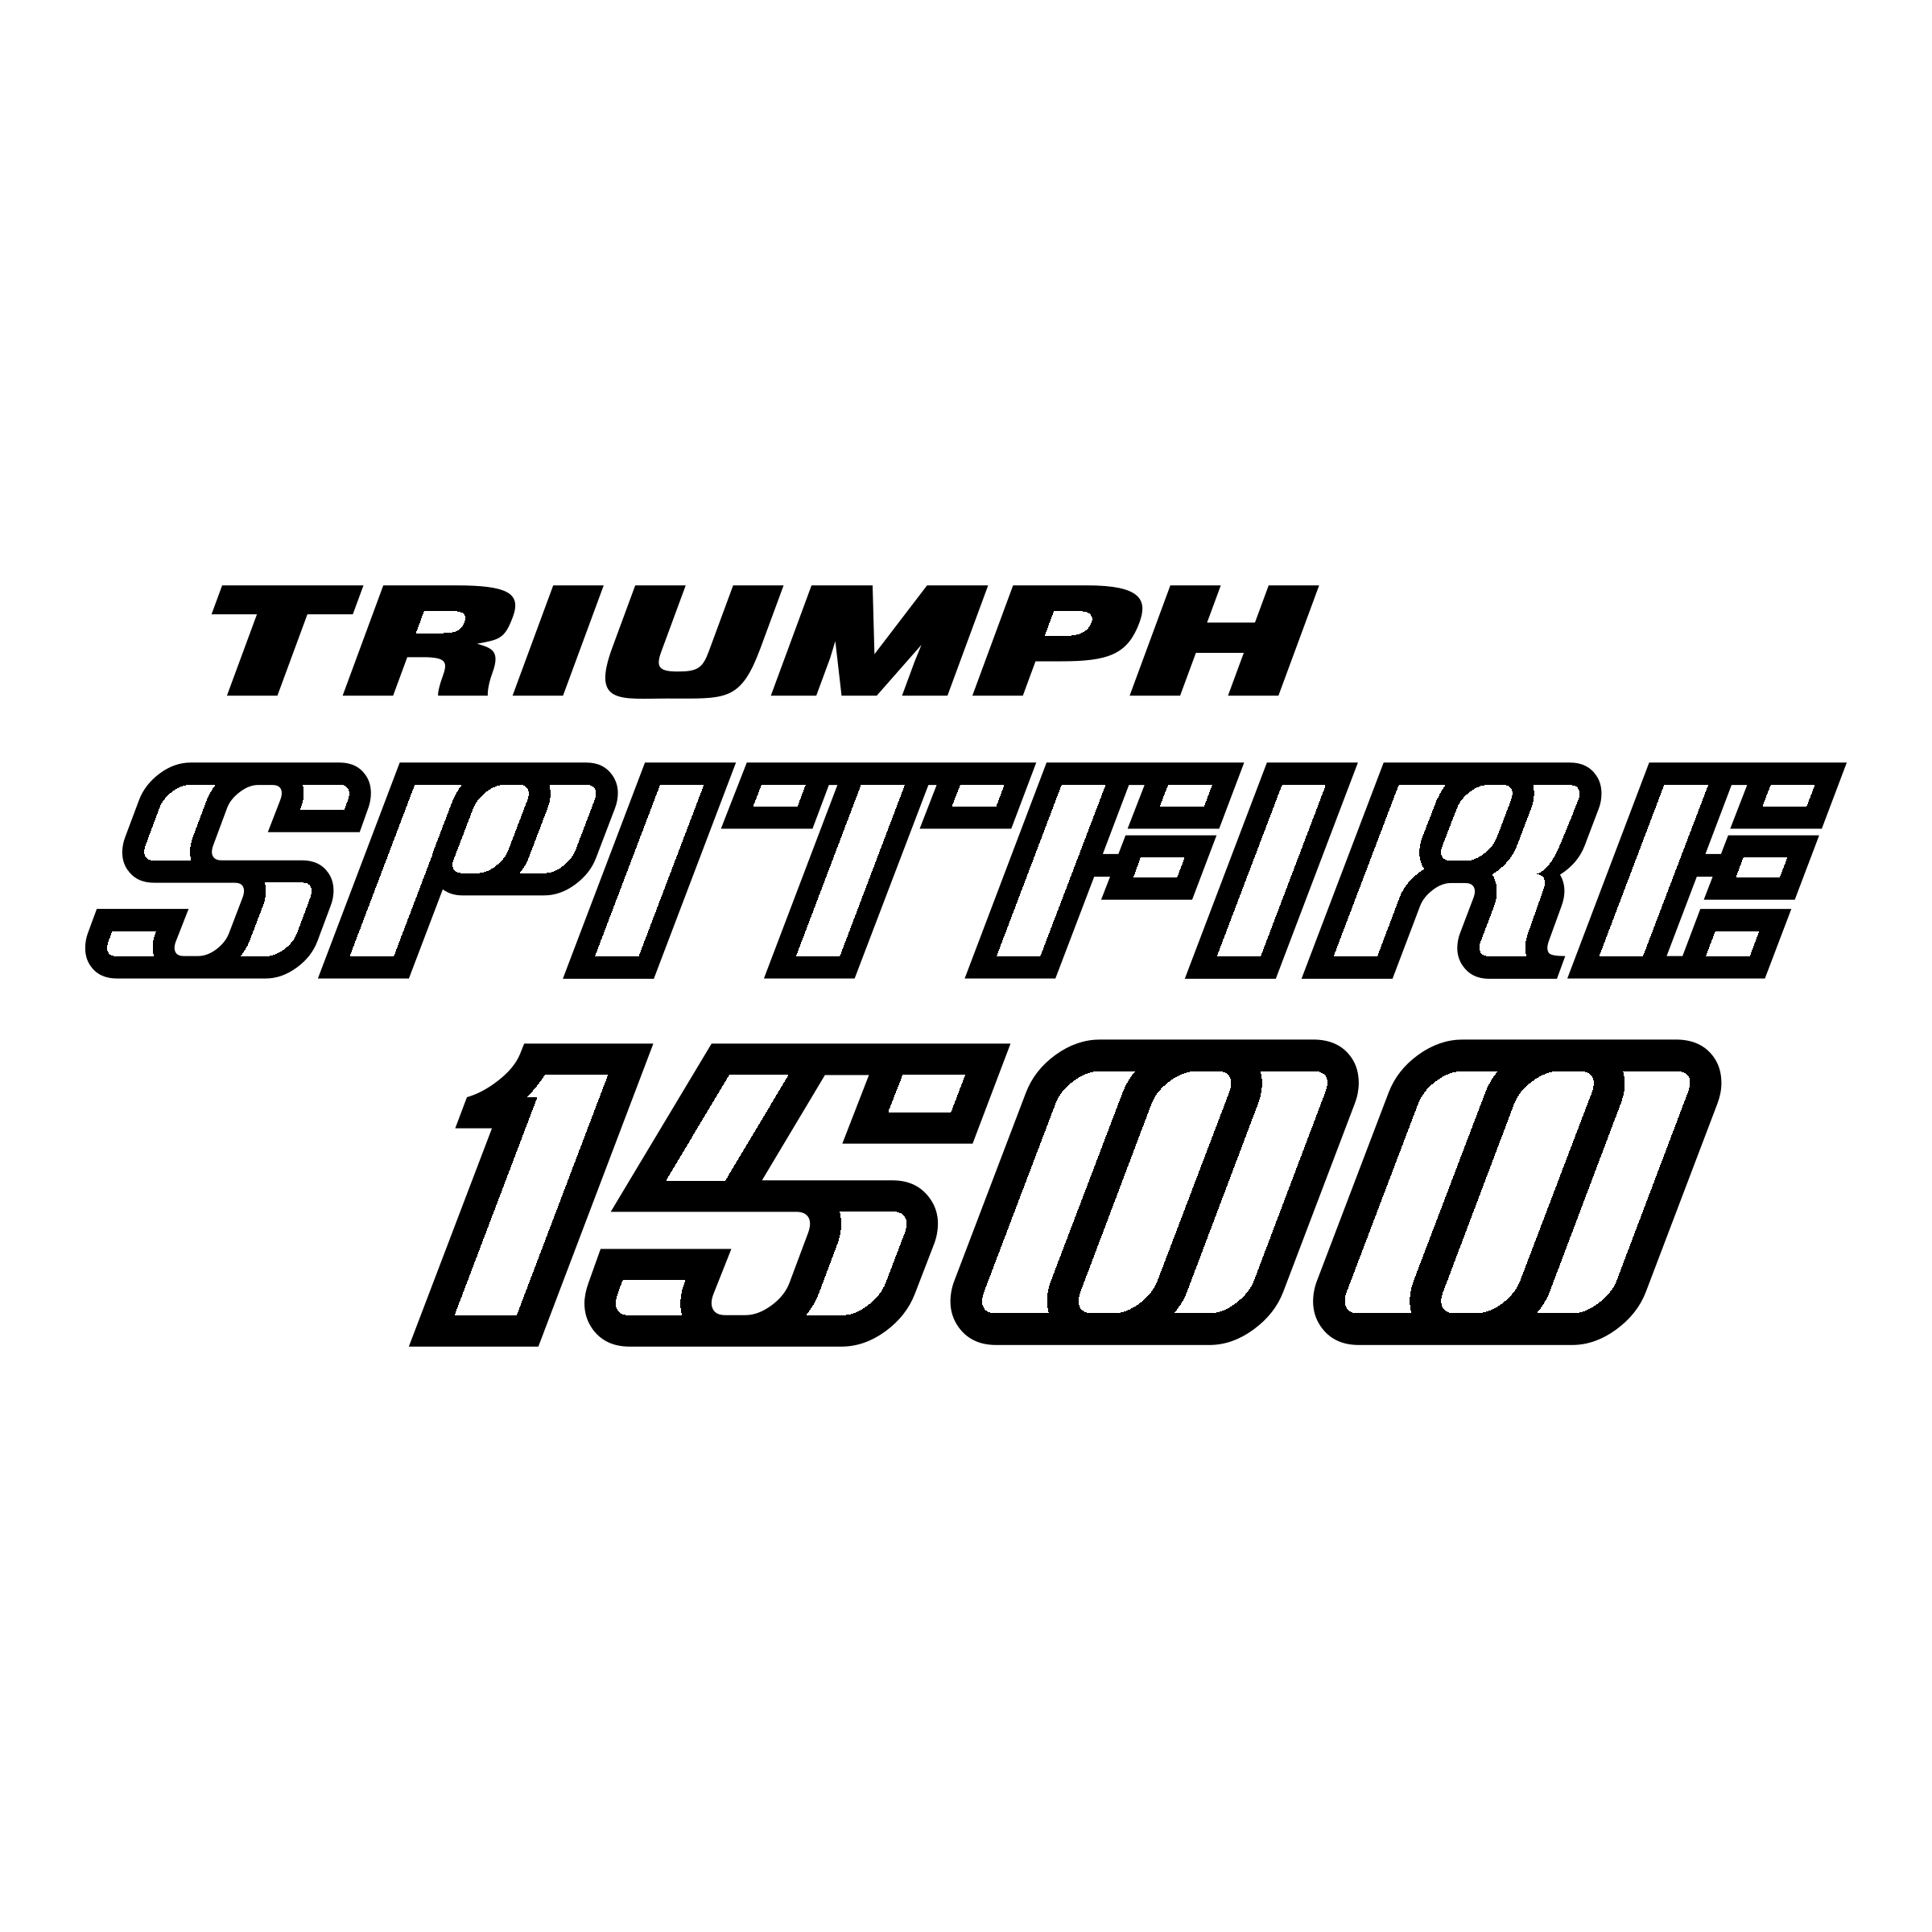 Triumph Spitfire Logo - Spitfire 1500 Logo PNG Transparent & SVG Vector - Freebie Supply